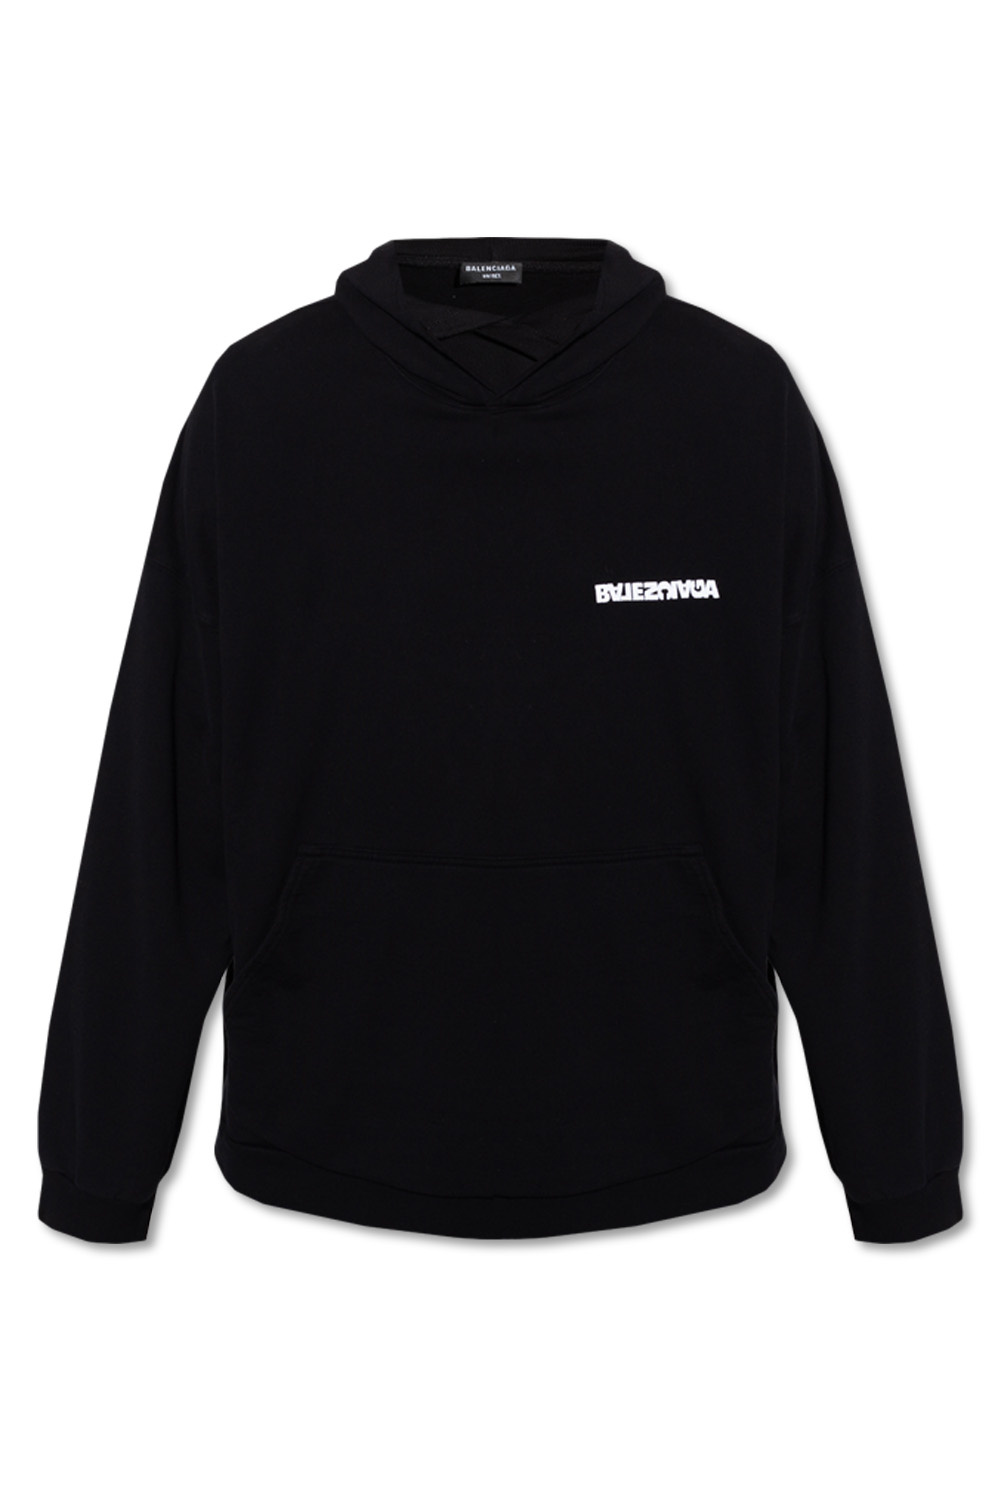 GenesinlifeShops - Balenciaga Logo - Société Anonyme drawstring pullover  jumper, Men's Clothing